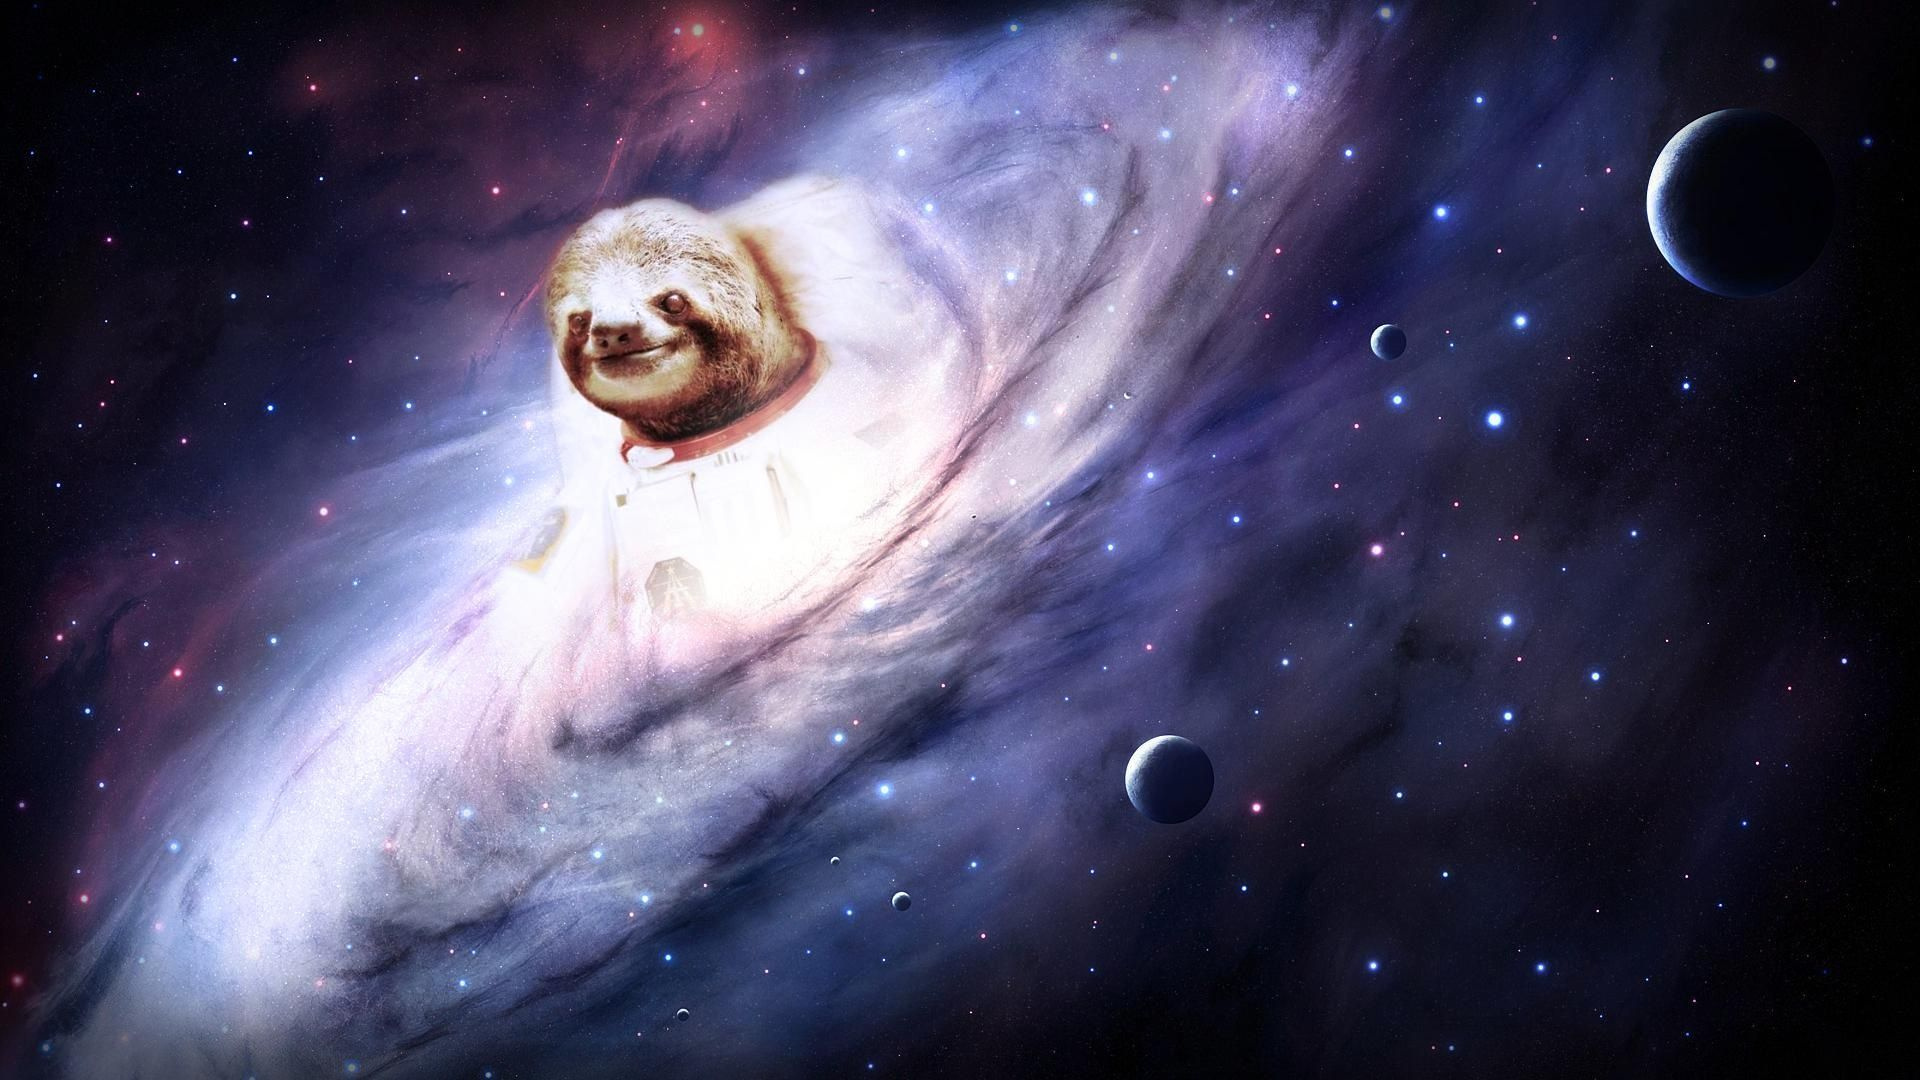 Sloth Astronaut